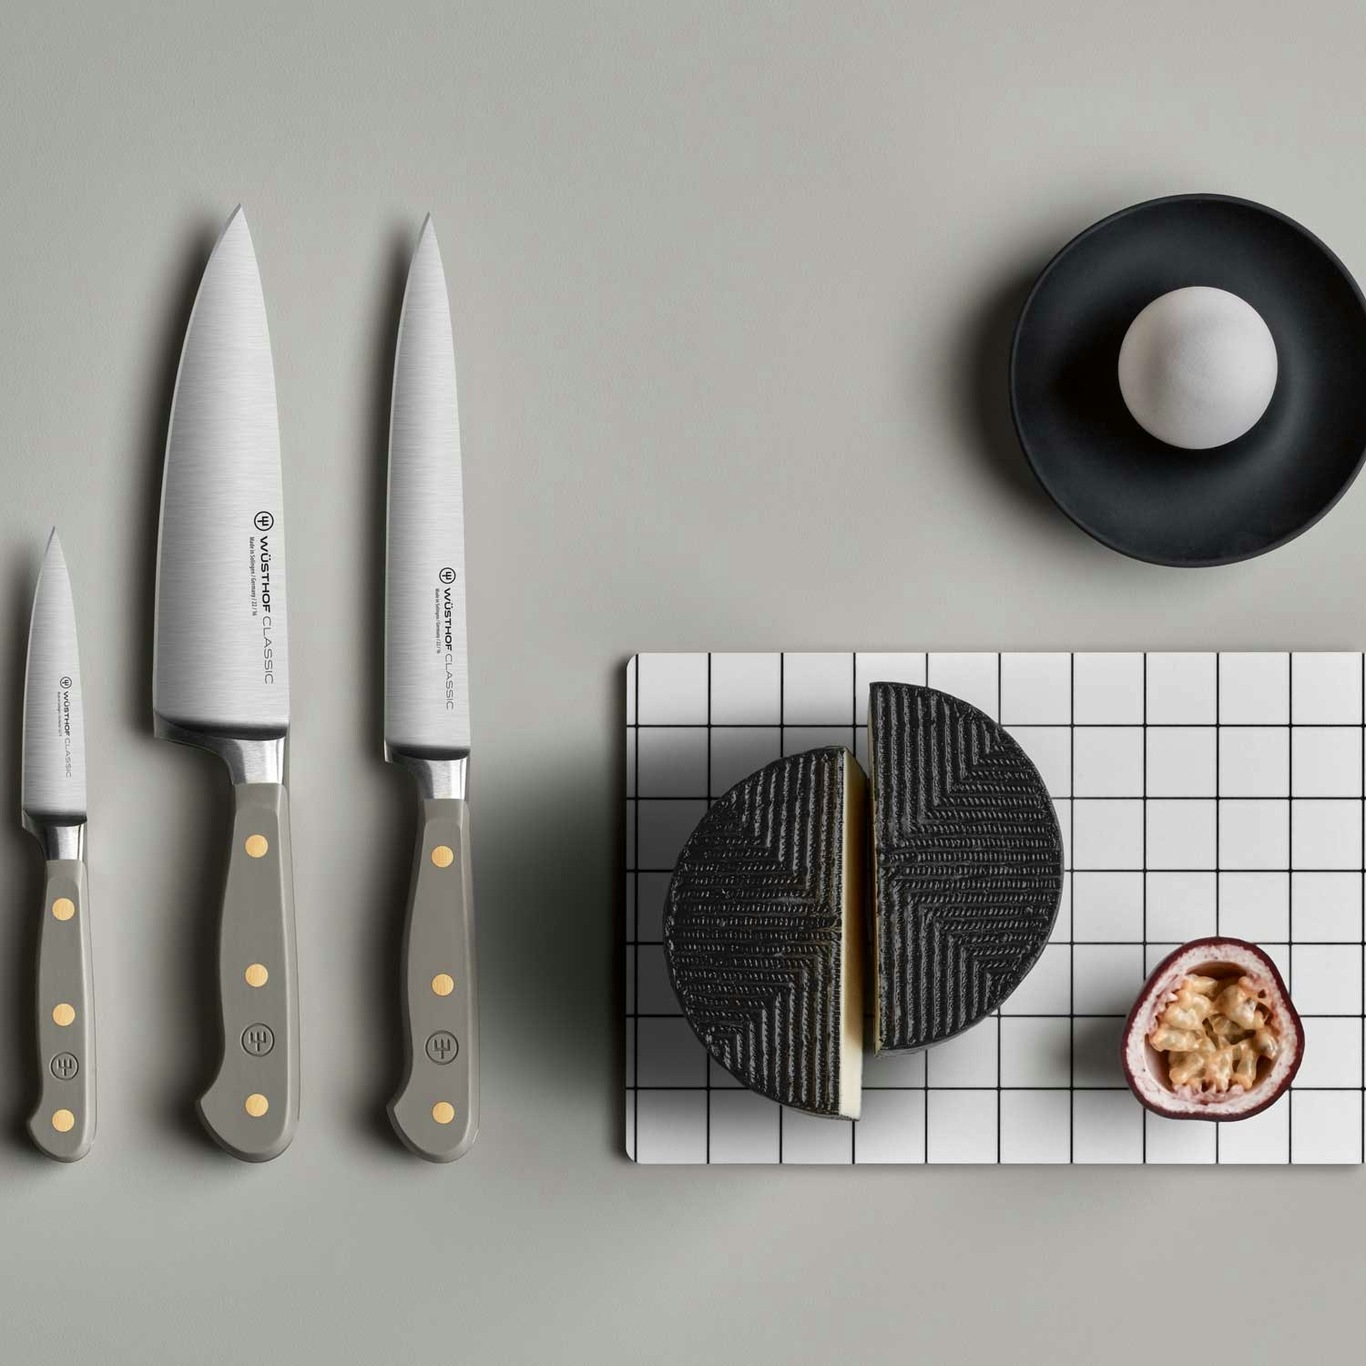 https://royaldesign.com/image/2/wusthof-classic-colour-chef-knife-16-cm-20?w=800&quality=80